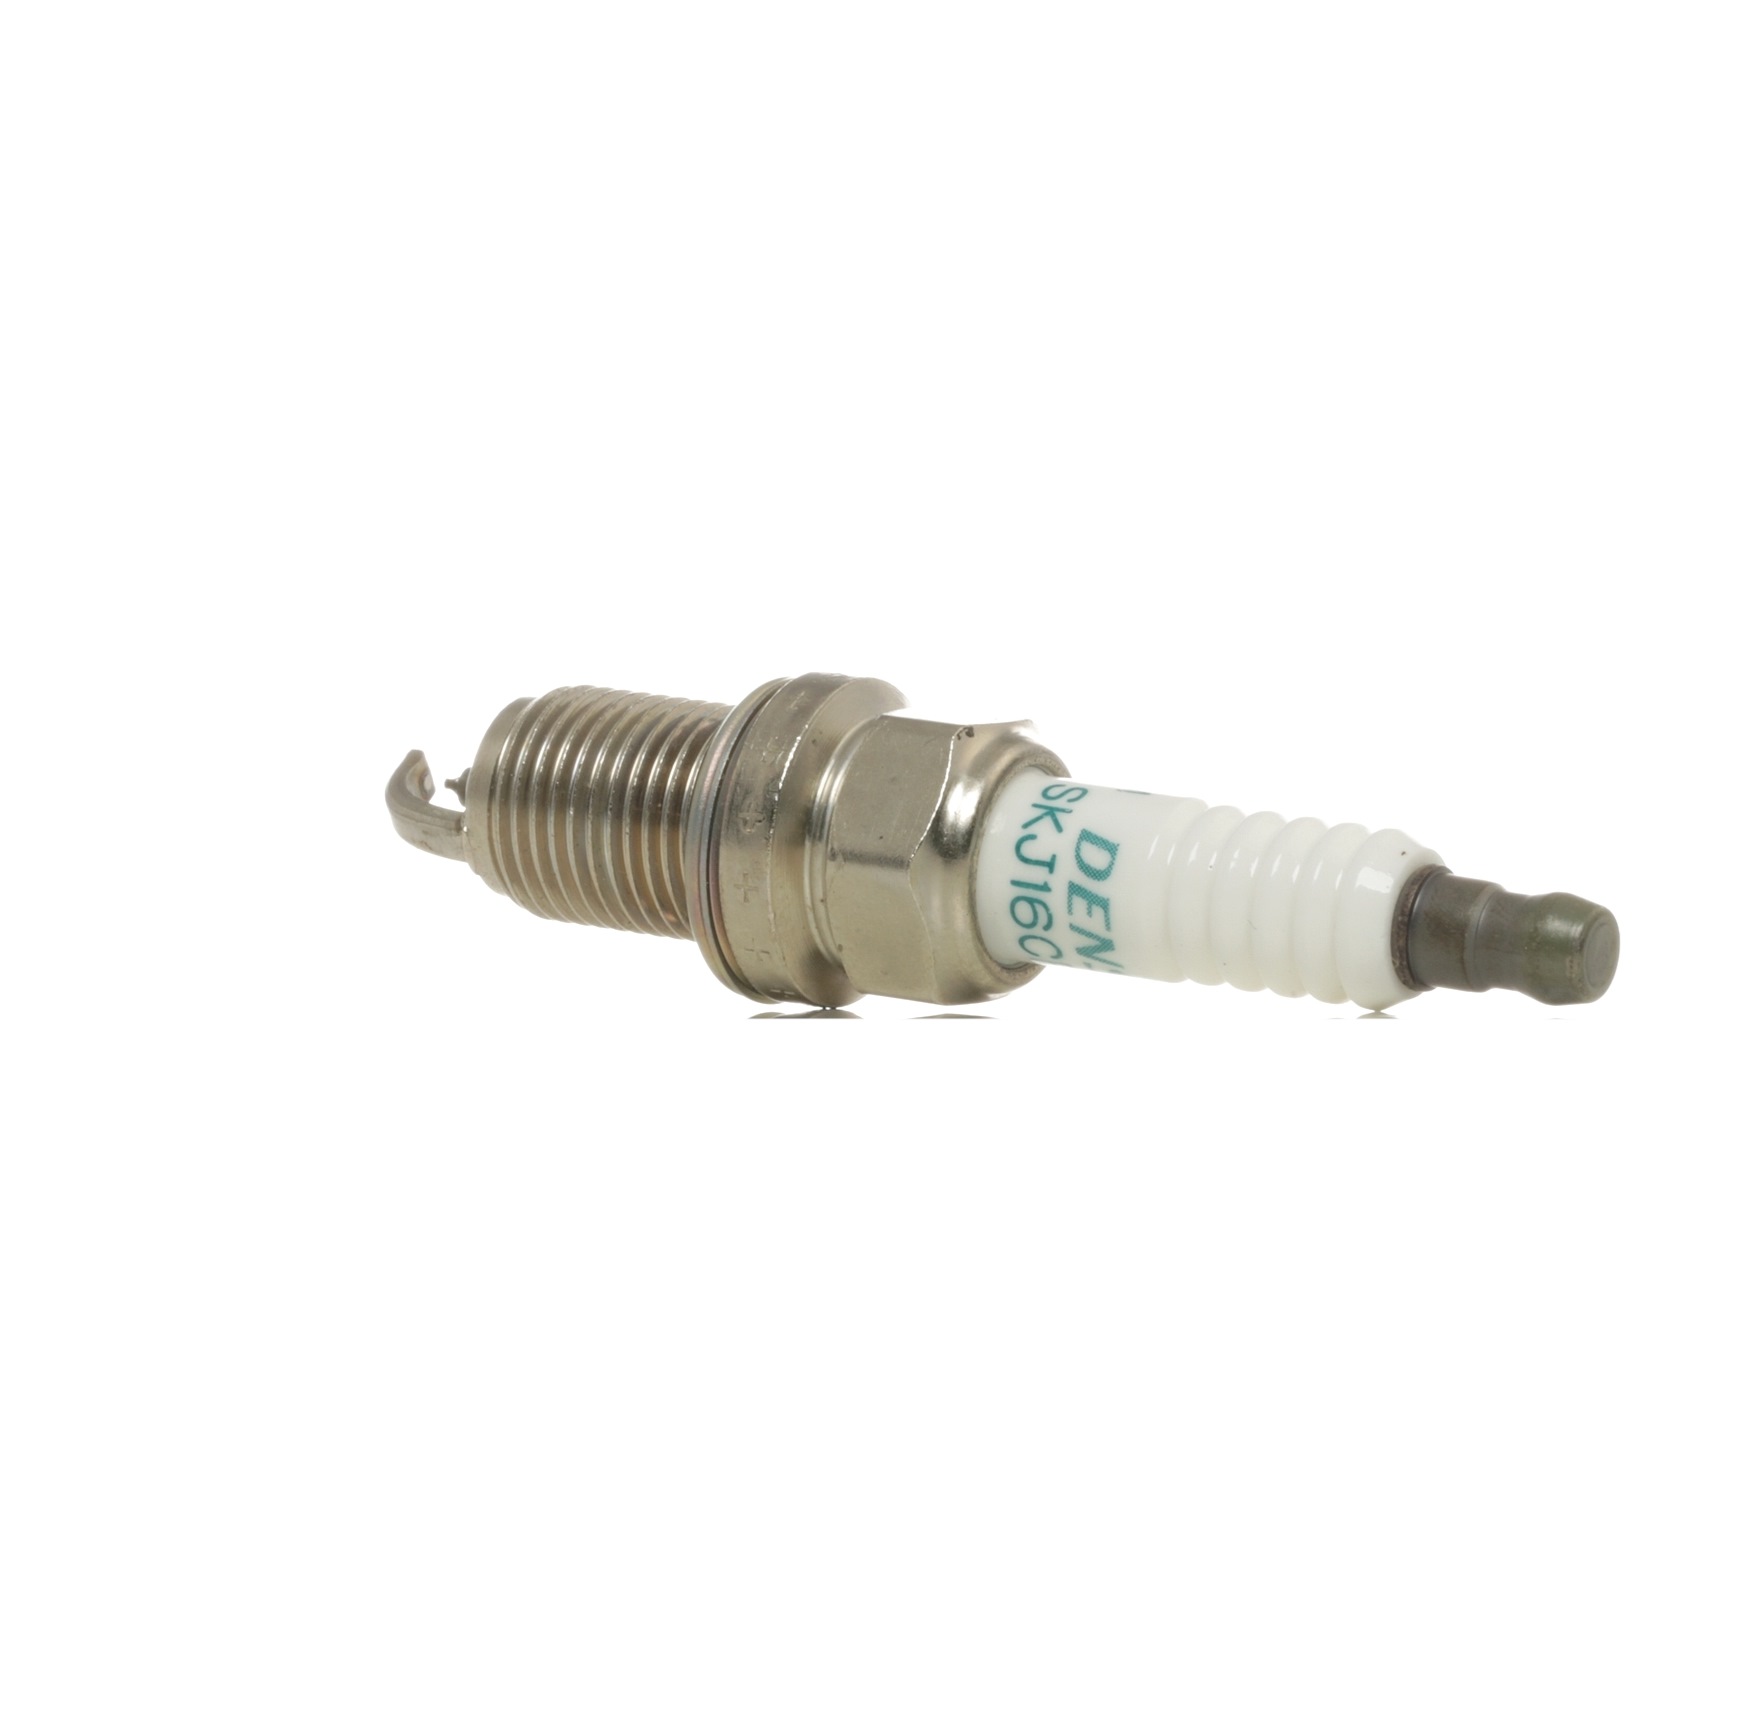 DENSO Extended Iridium SKJ16CR-L11 Spark plug Spanner Size: 16